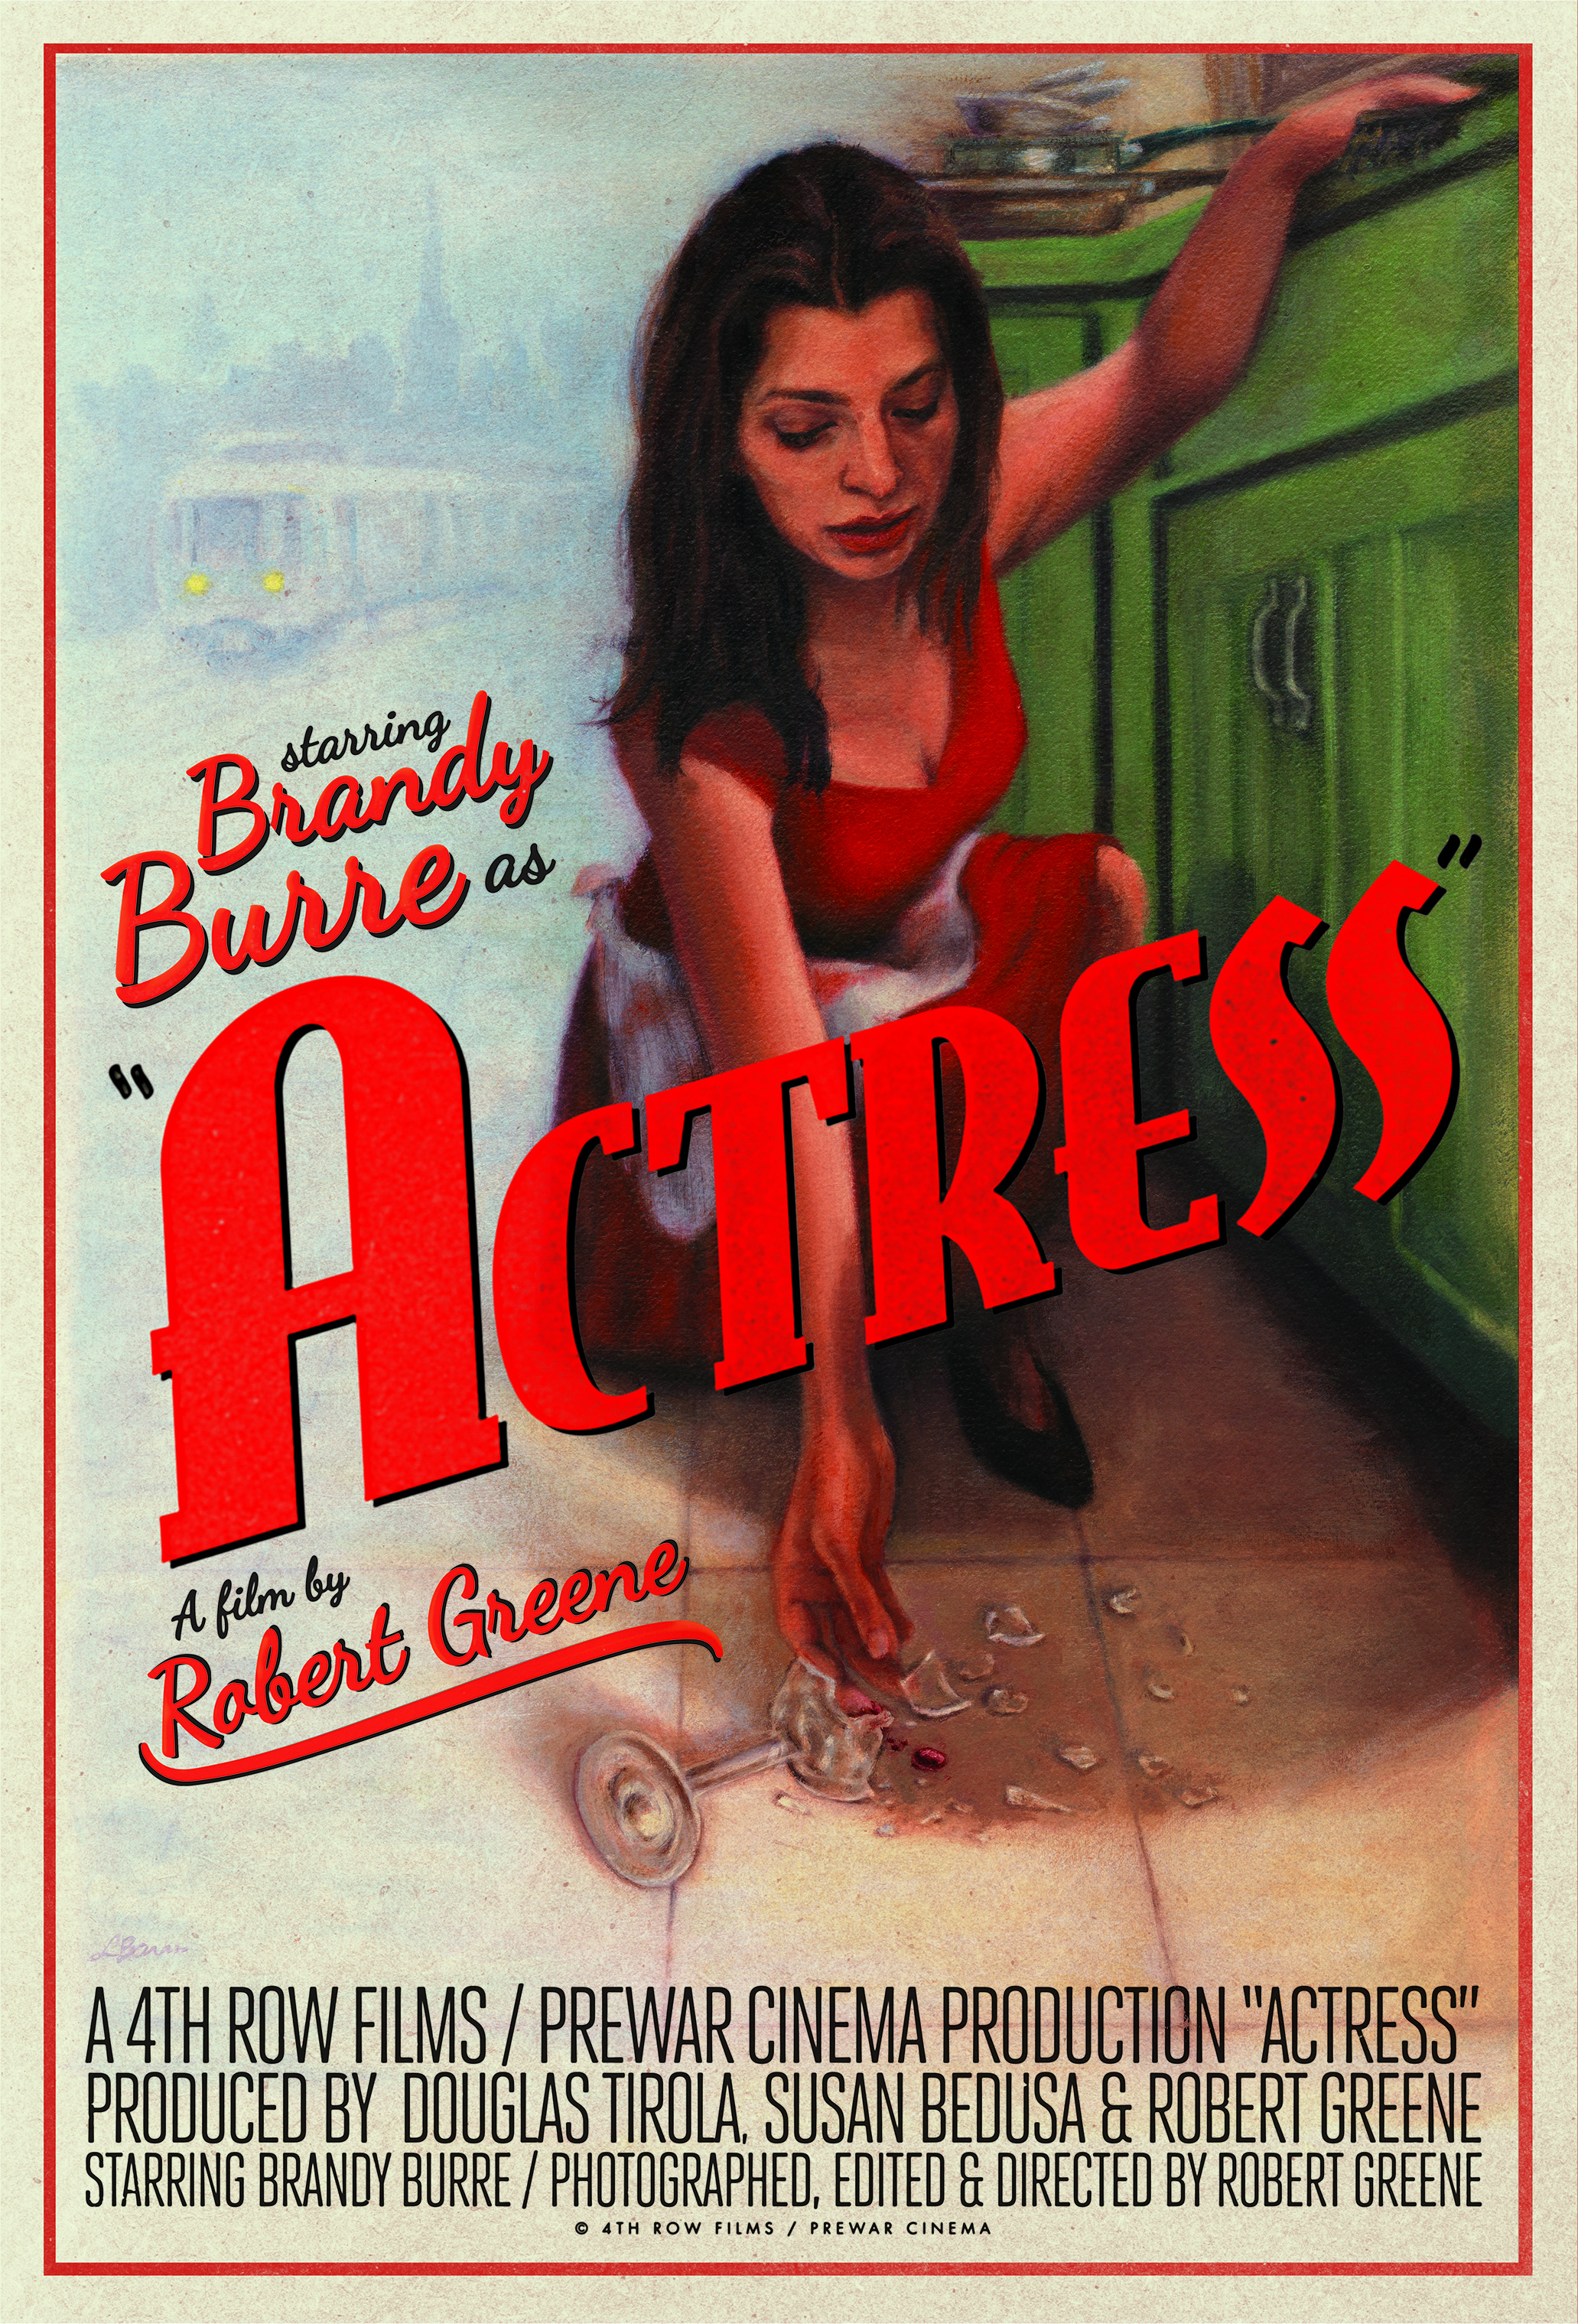 Brandy Burre in Actress (2014)